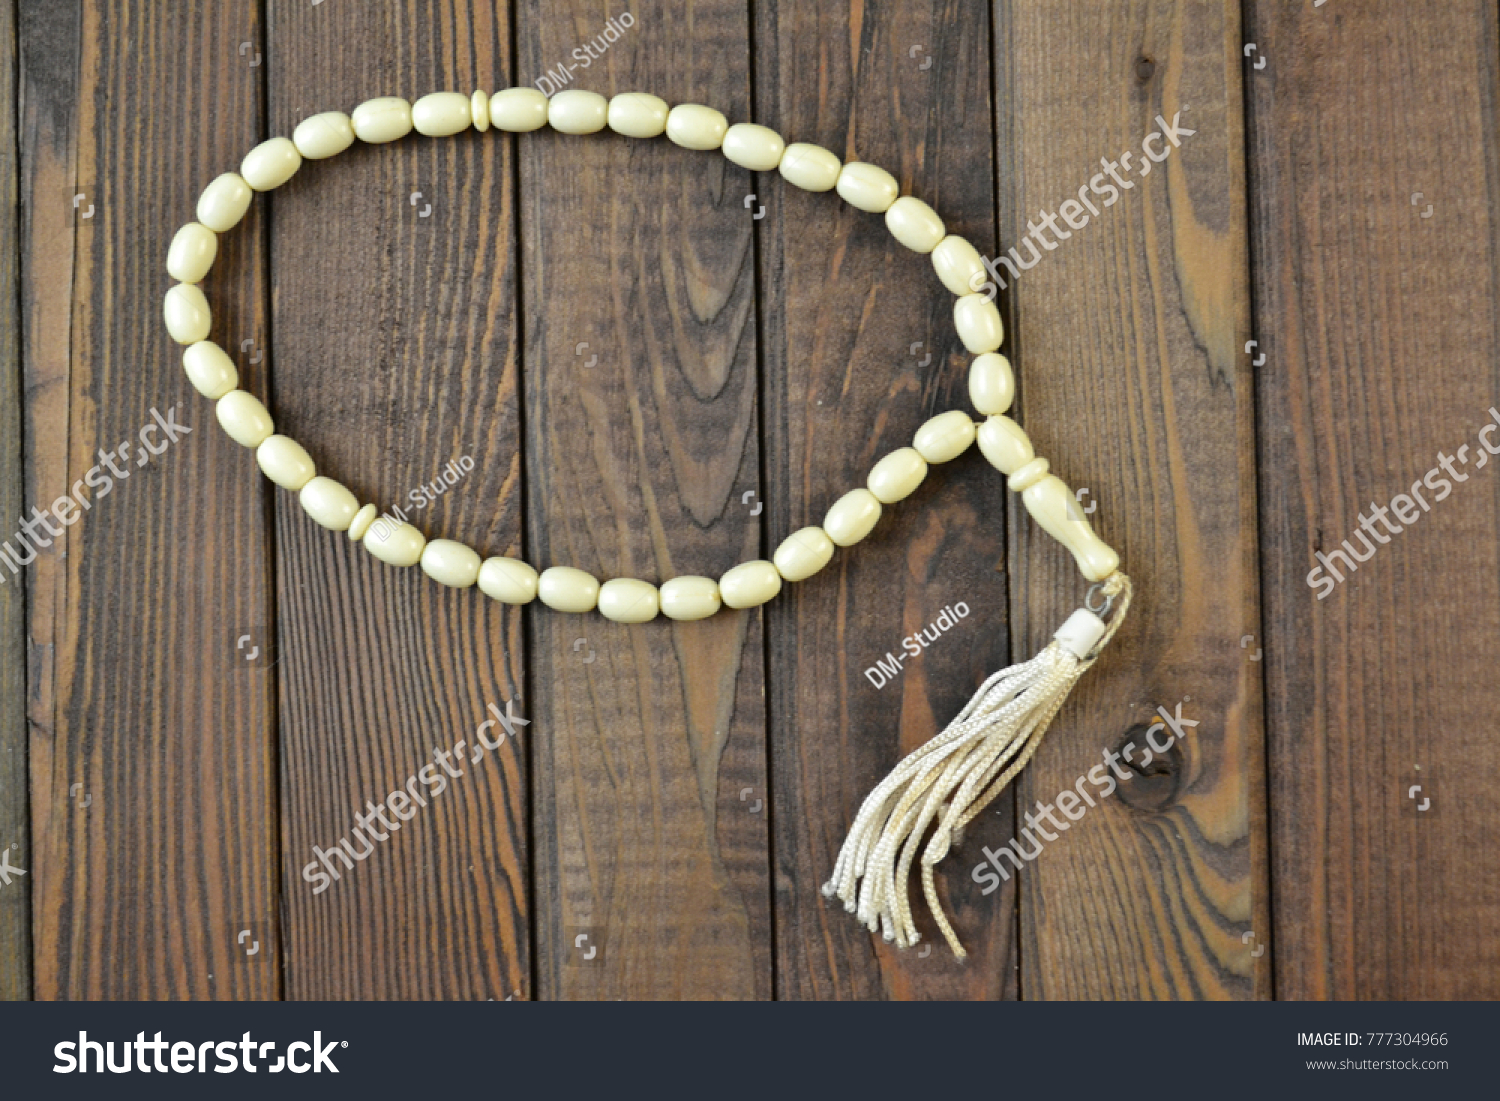 Verious prayer beads, subha or tasbih #777304966